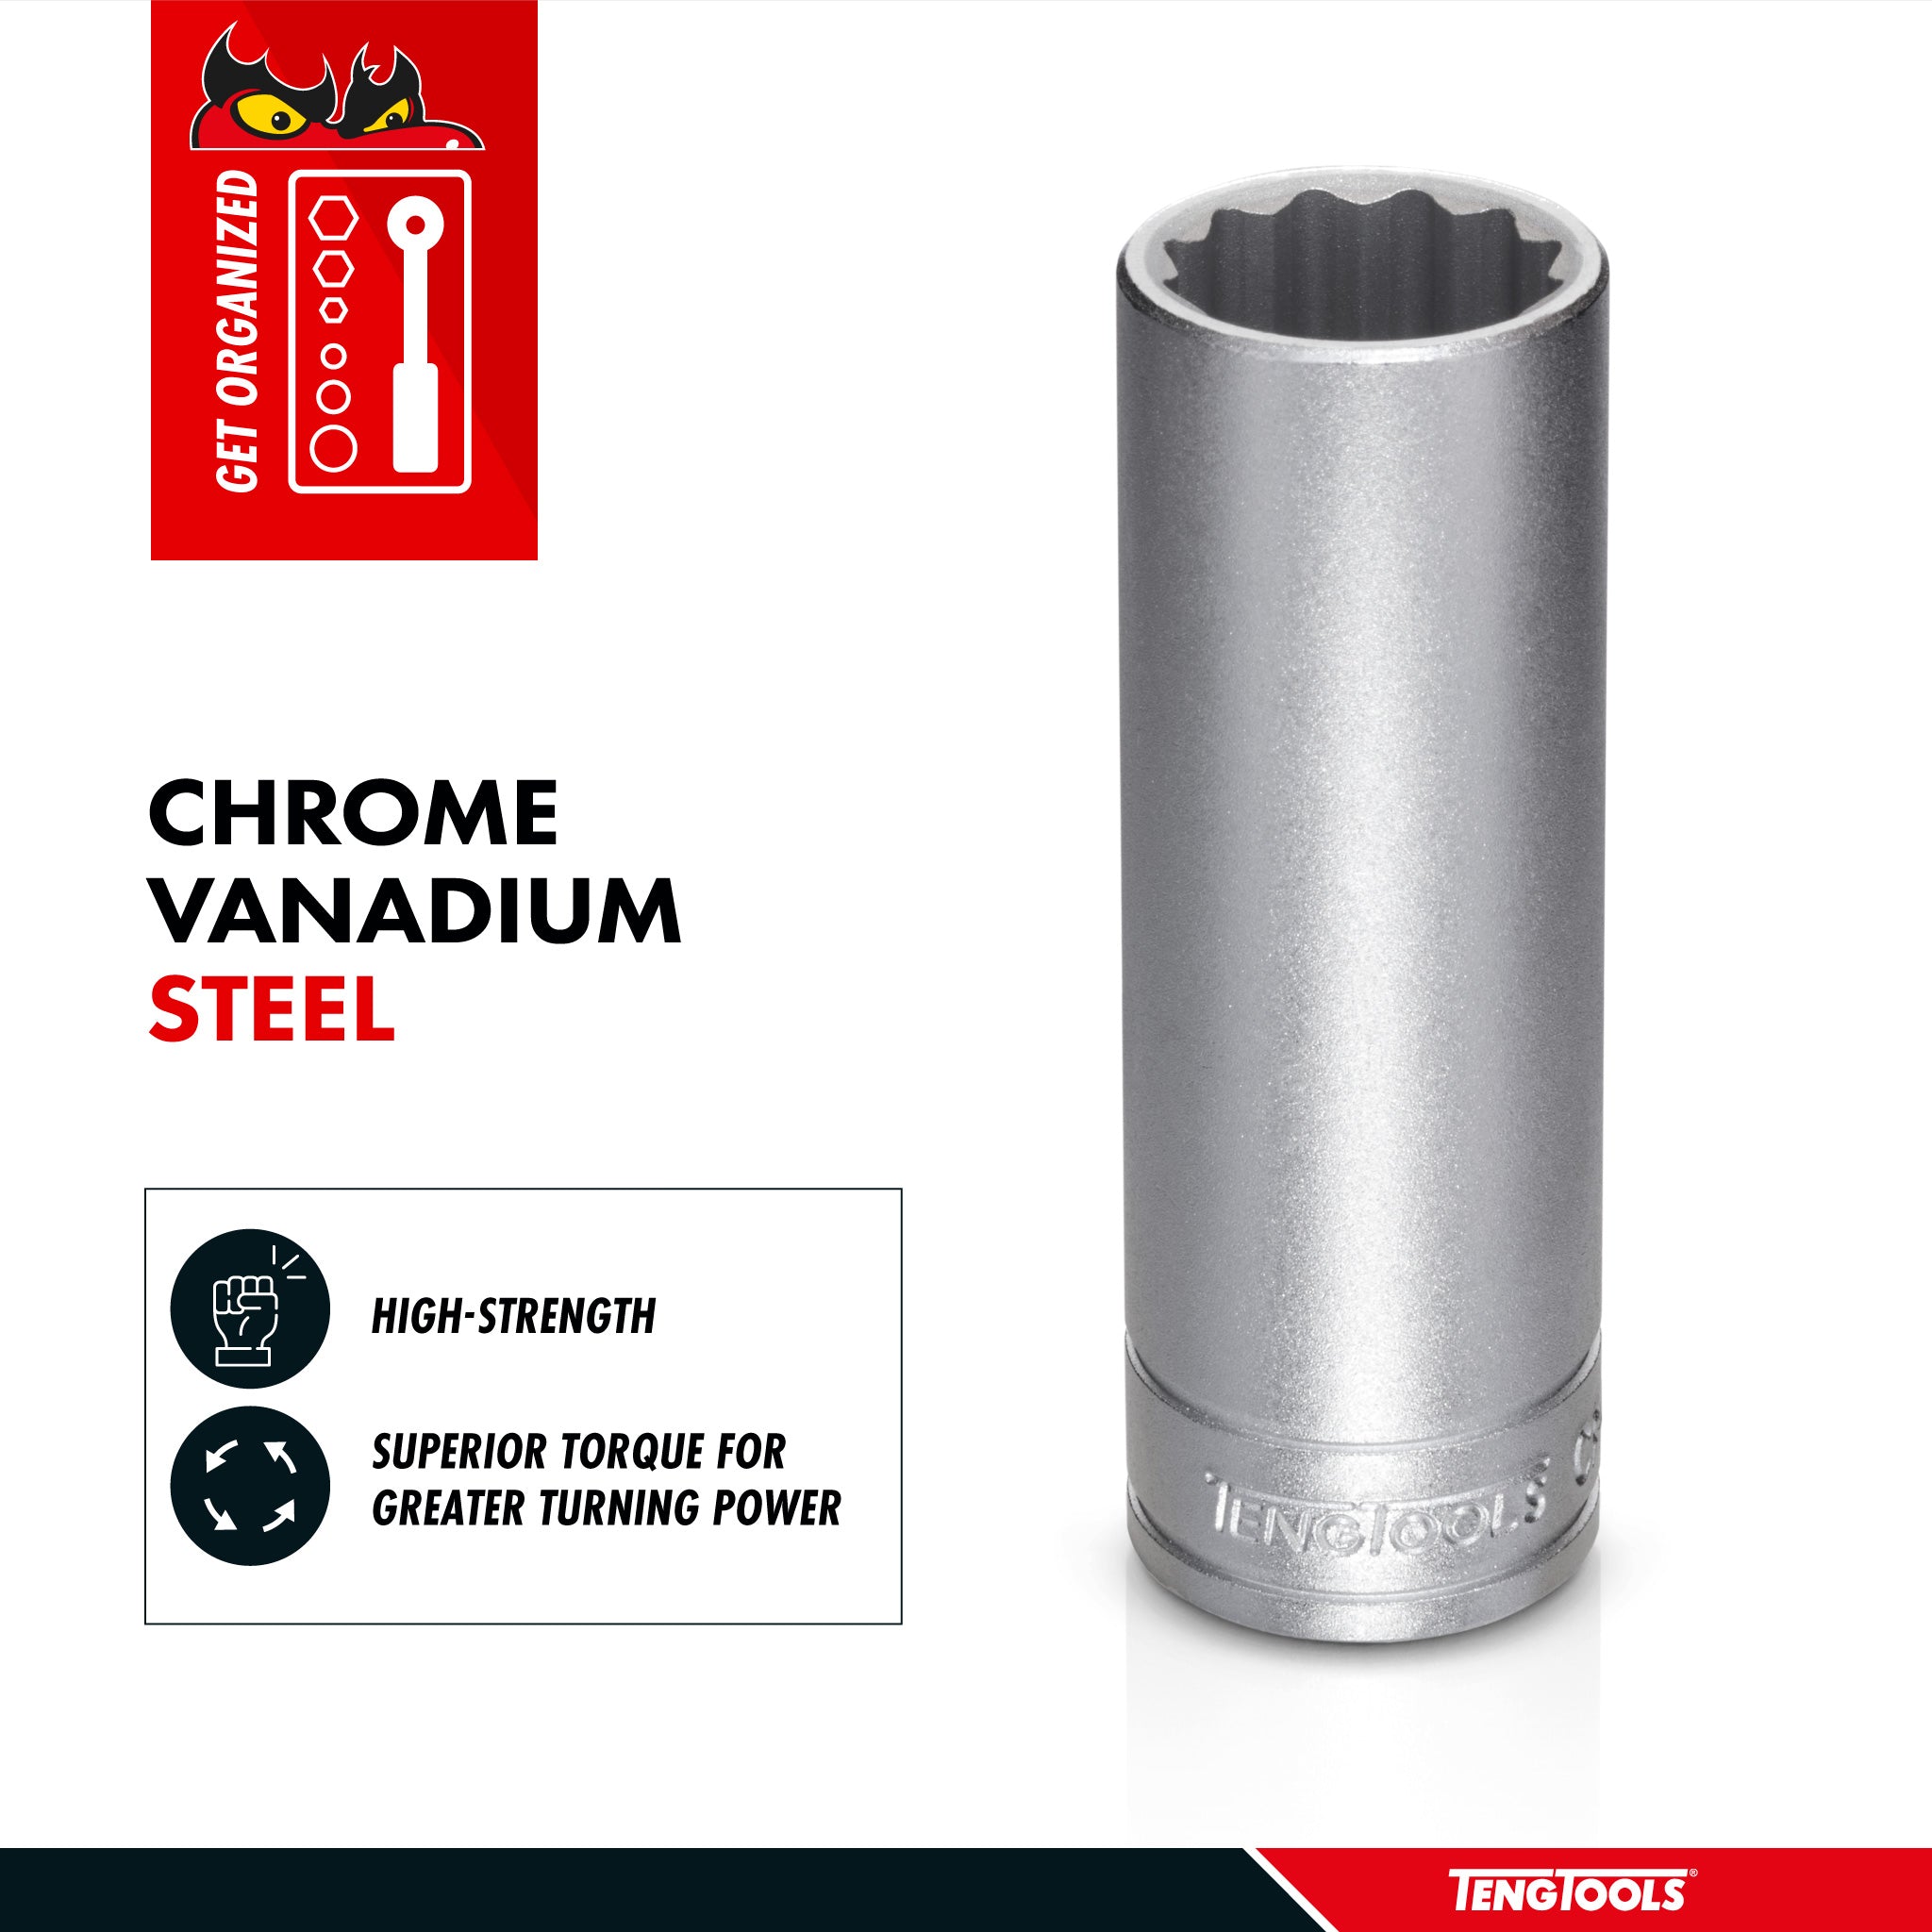 Teng Tools 1/2 Inch Drive 12 Point Metric Deep Chrome Vanadium Sockets - 15mm